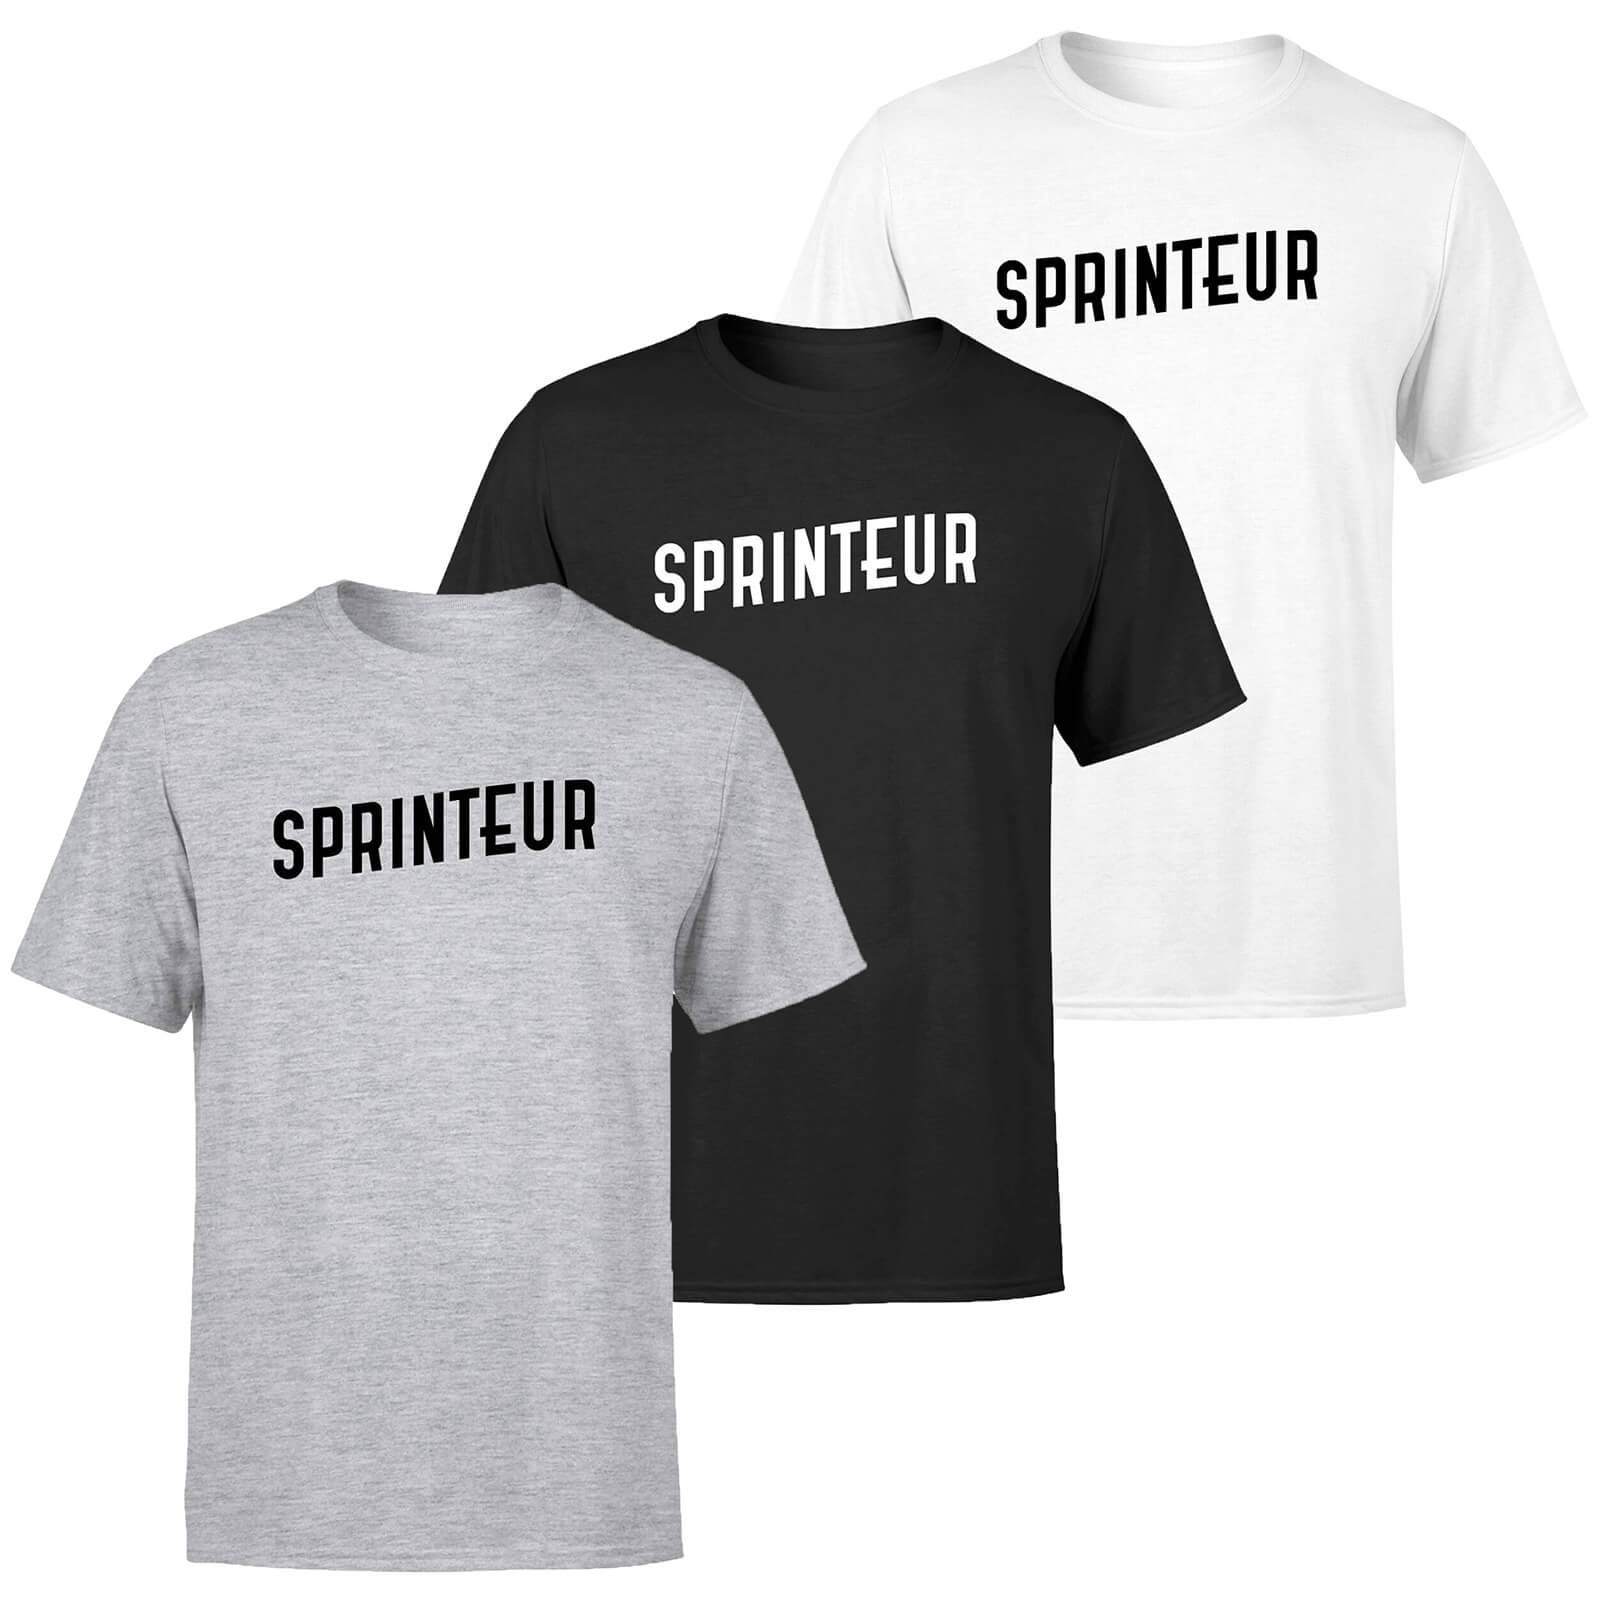 Sprinteur Men's T-Shirt - XXL - White